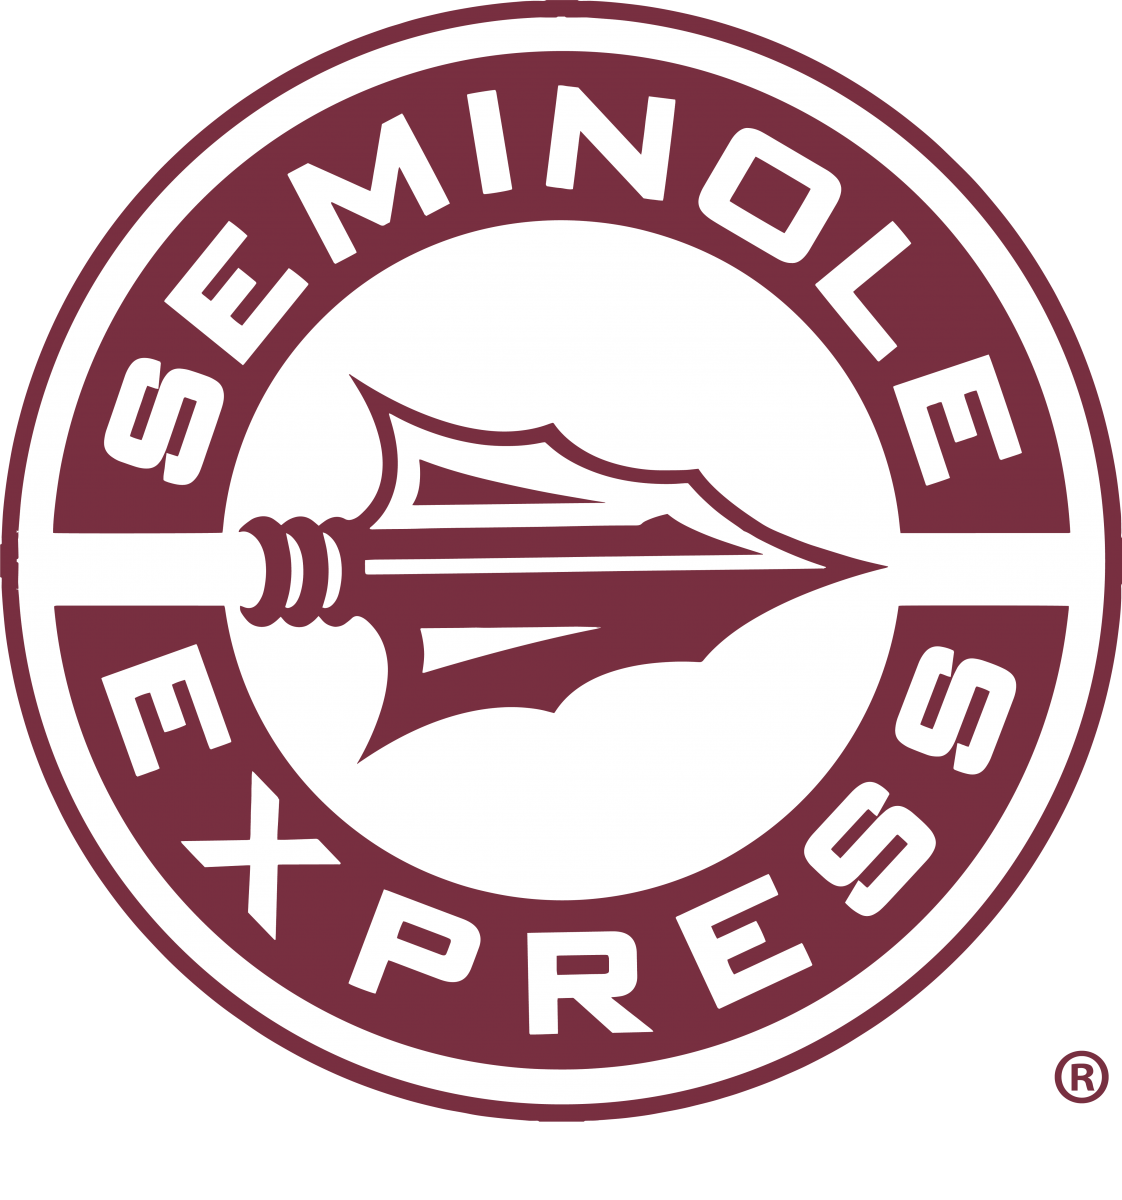 Seminole Express